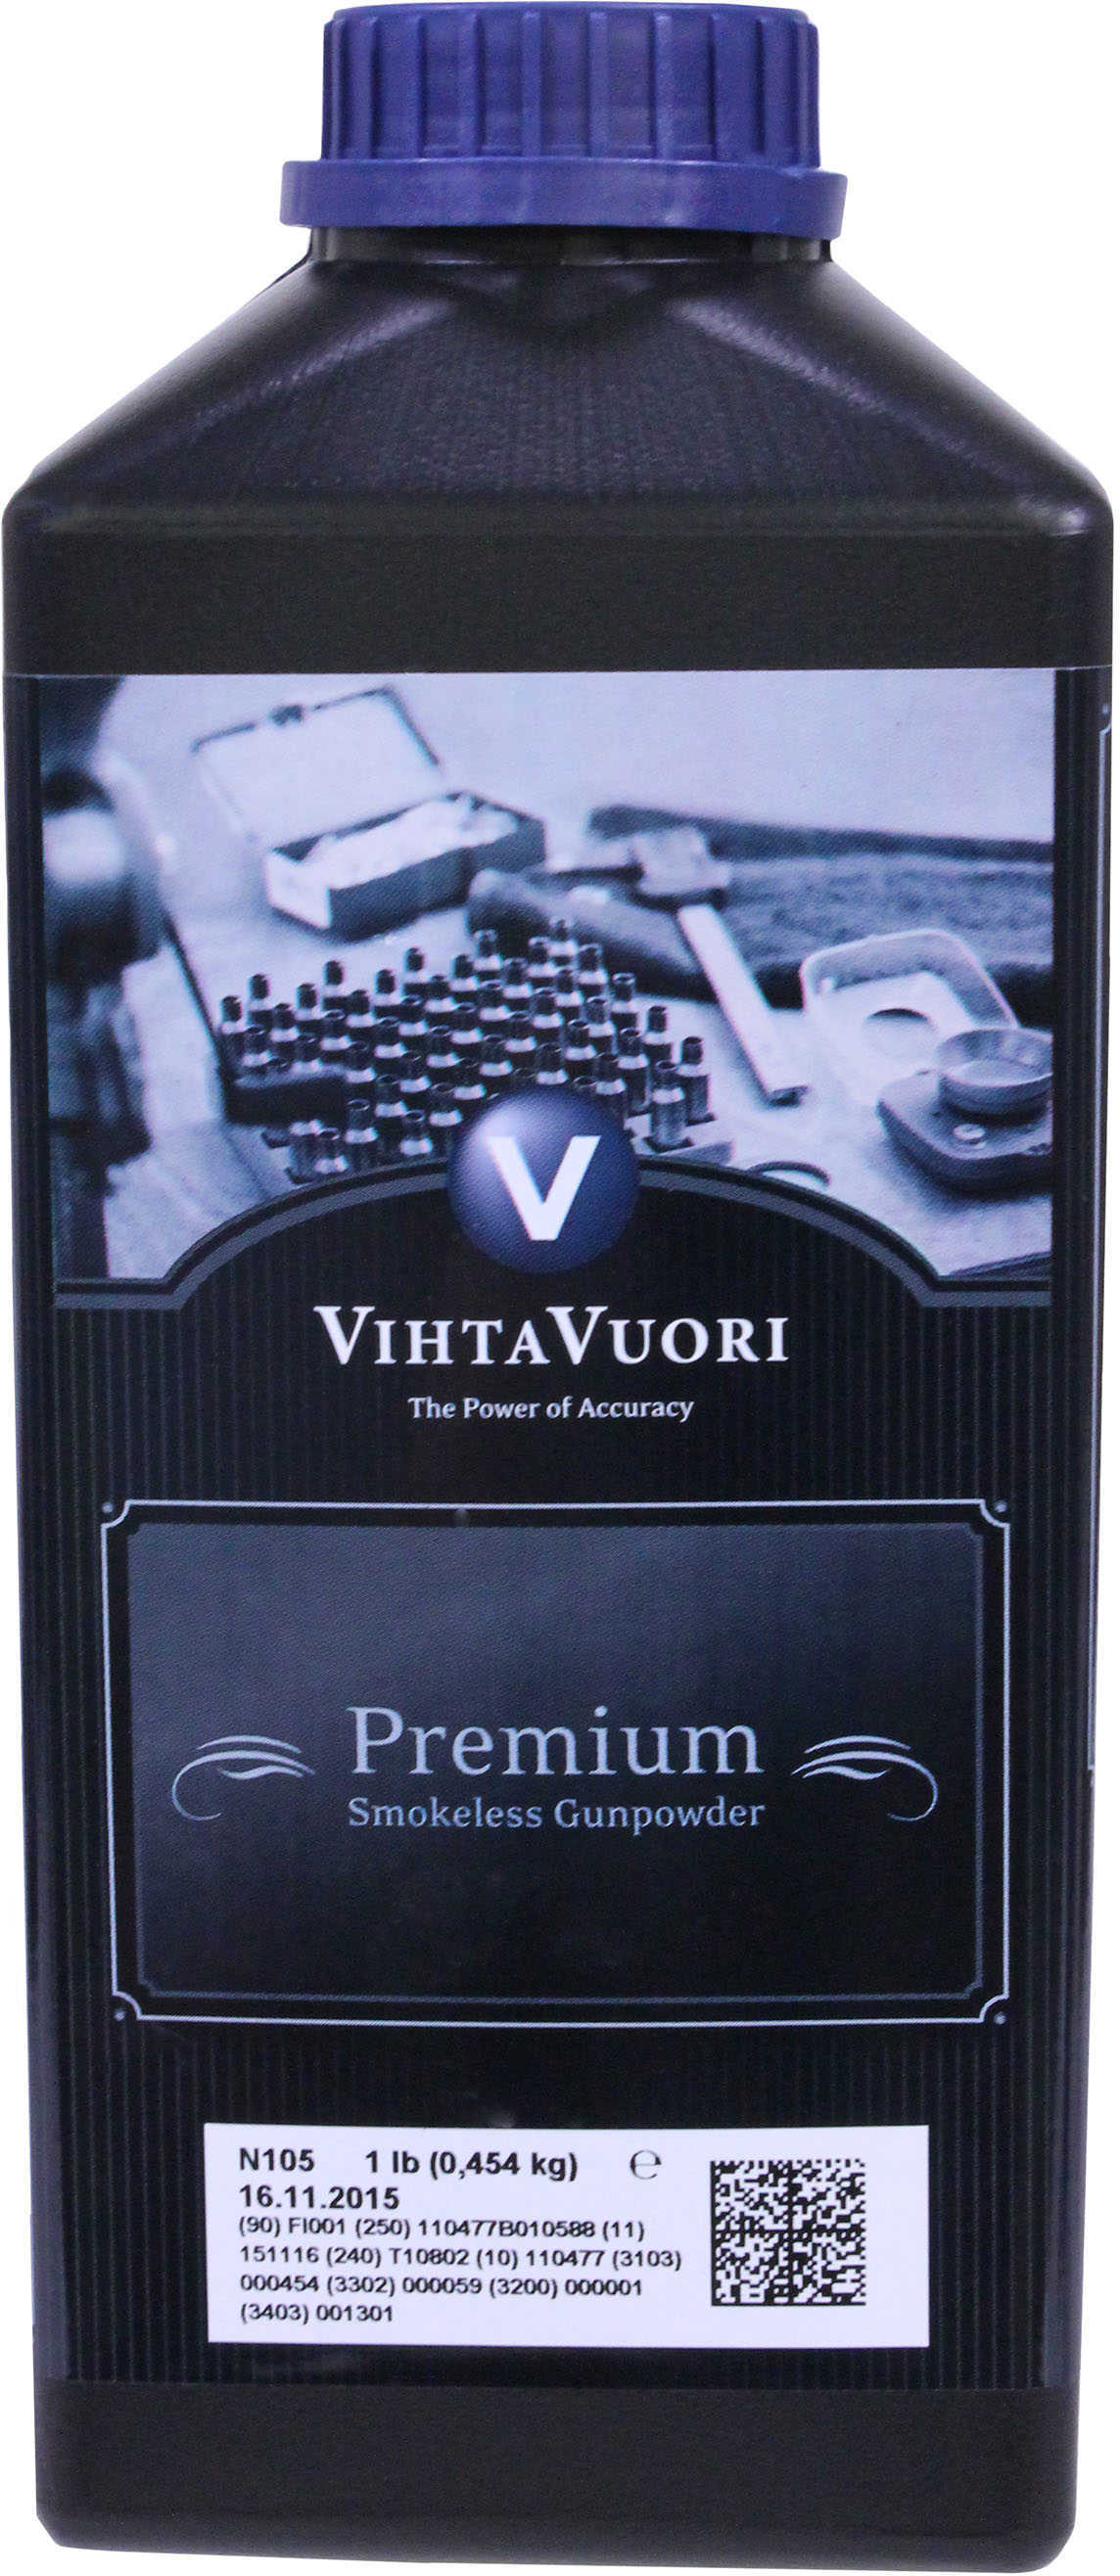 VihtaVouri N105 Smokeless Handgun Powder, 1 lb Container Md: N1051